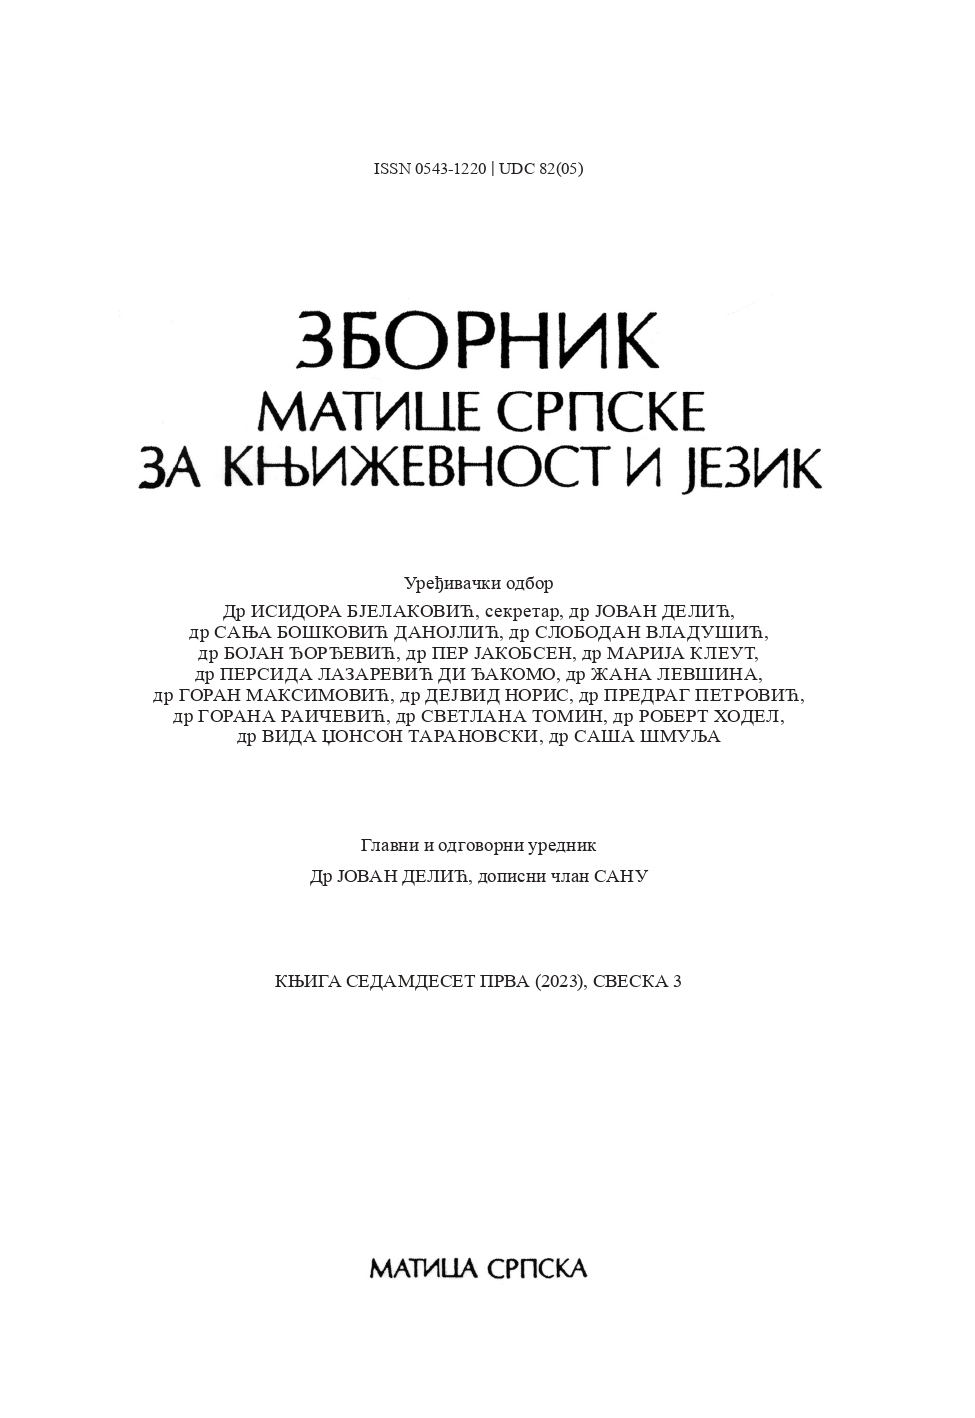 ESSAY ON SERBIAN CIVIC POETRY OF PRE-ROMANTICISM NEW INSIGHTS INTO JOVAN ALEKSIJEVIĆ’S CIVIC MANUSCRIPT SONGBOOK ПѢСНИ ПѢСНЕЙ (1813) FROM THE LEGACY OF VUK STEFANOVIĆ KARADŽIĆ Cover Image